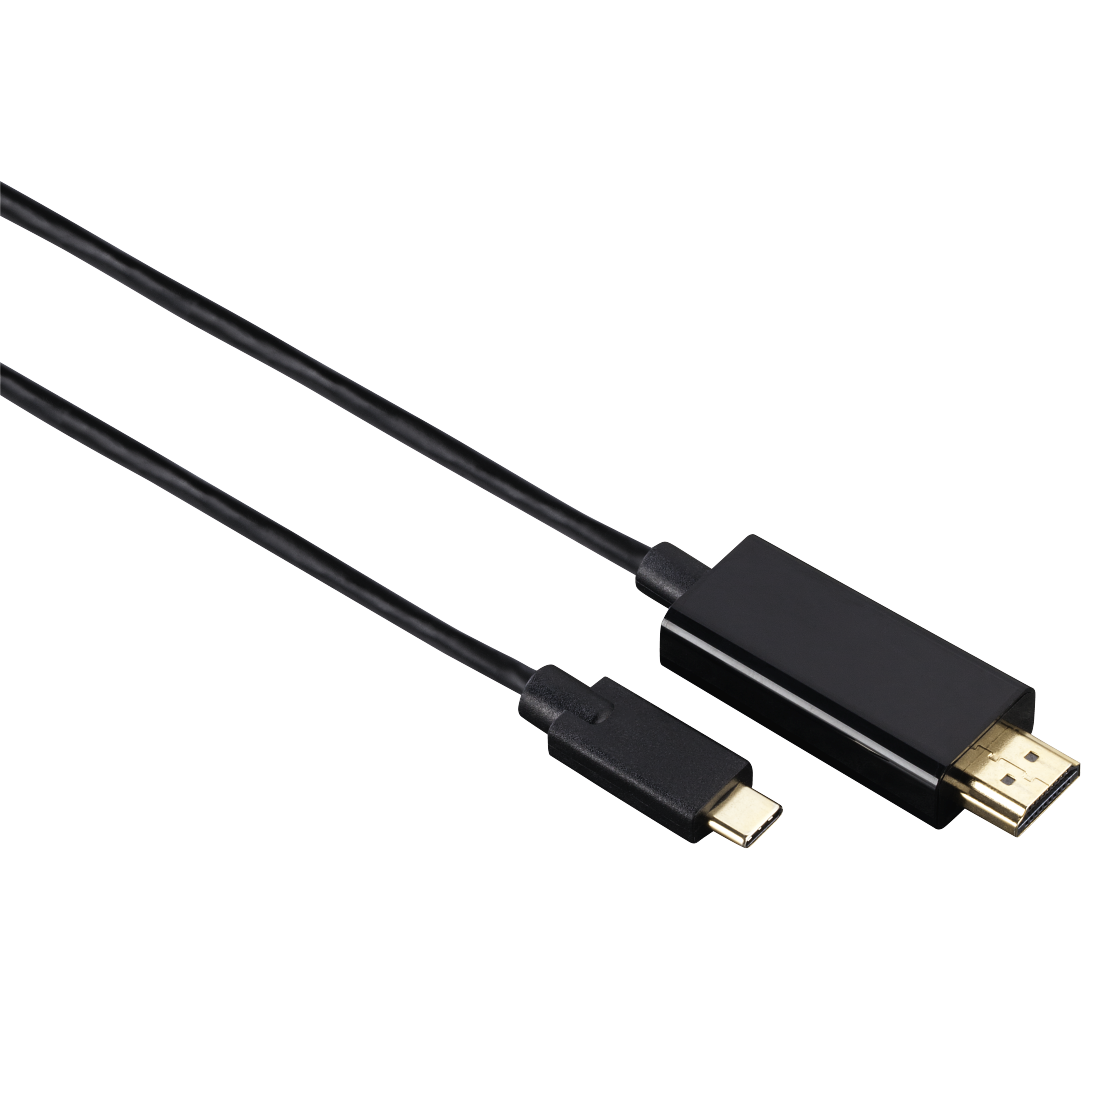 00122205 Hama USB-C Adapter Cable for HDMI™, Ultra HD, 1.80 m | hama.com